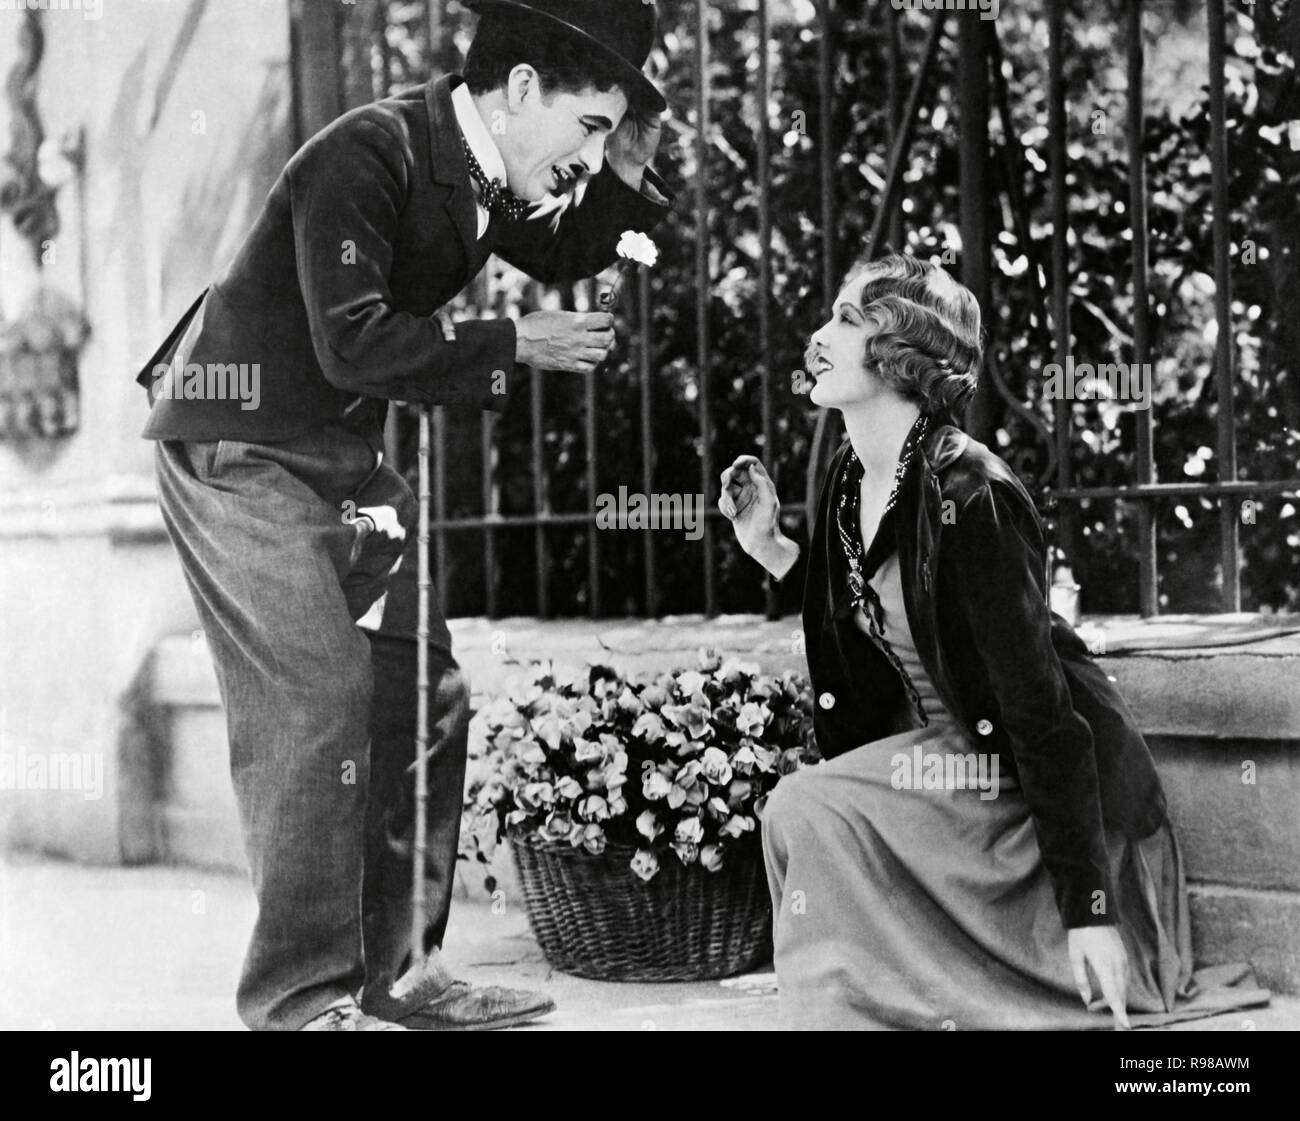 Original film title: CITY LIGHTS. English title: CITY LIGHTS. Year: 1931. Director: CHARLIE CHAPLIN. Stars: CHARLIE CHAPLIN; VIRGINIA CHERRILL. Credit: UNITED ARTISTS / Album Stock Photo